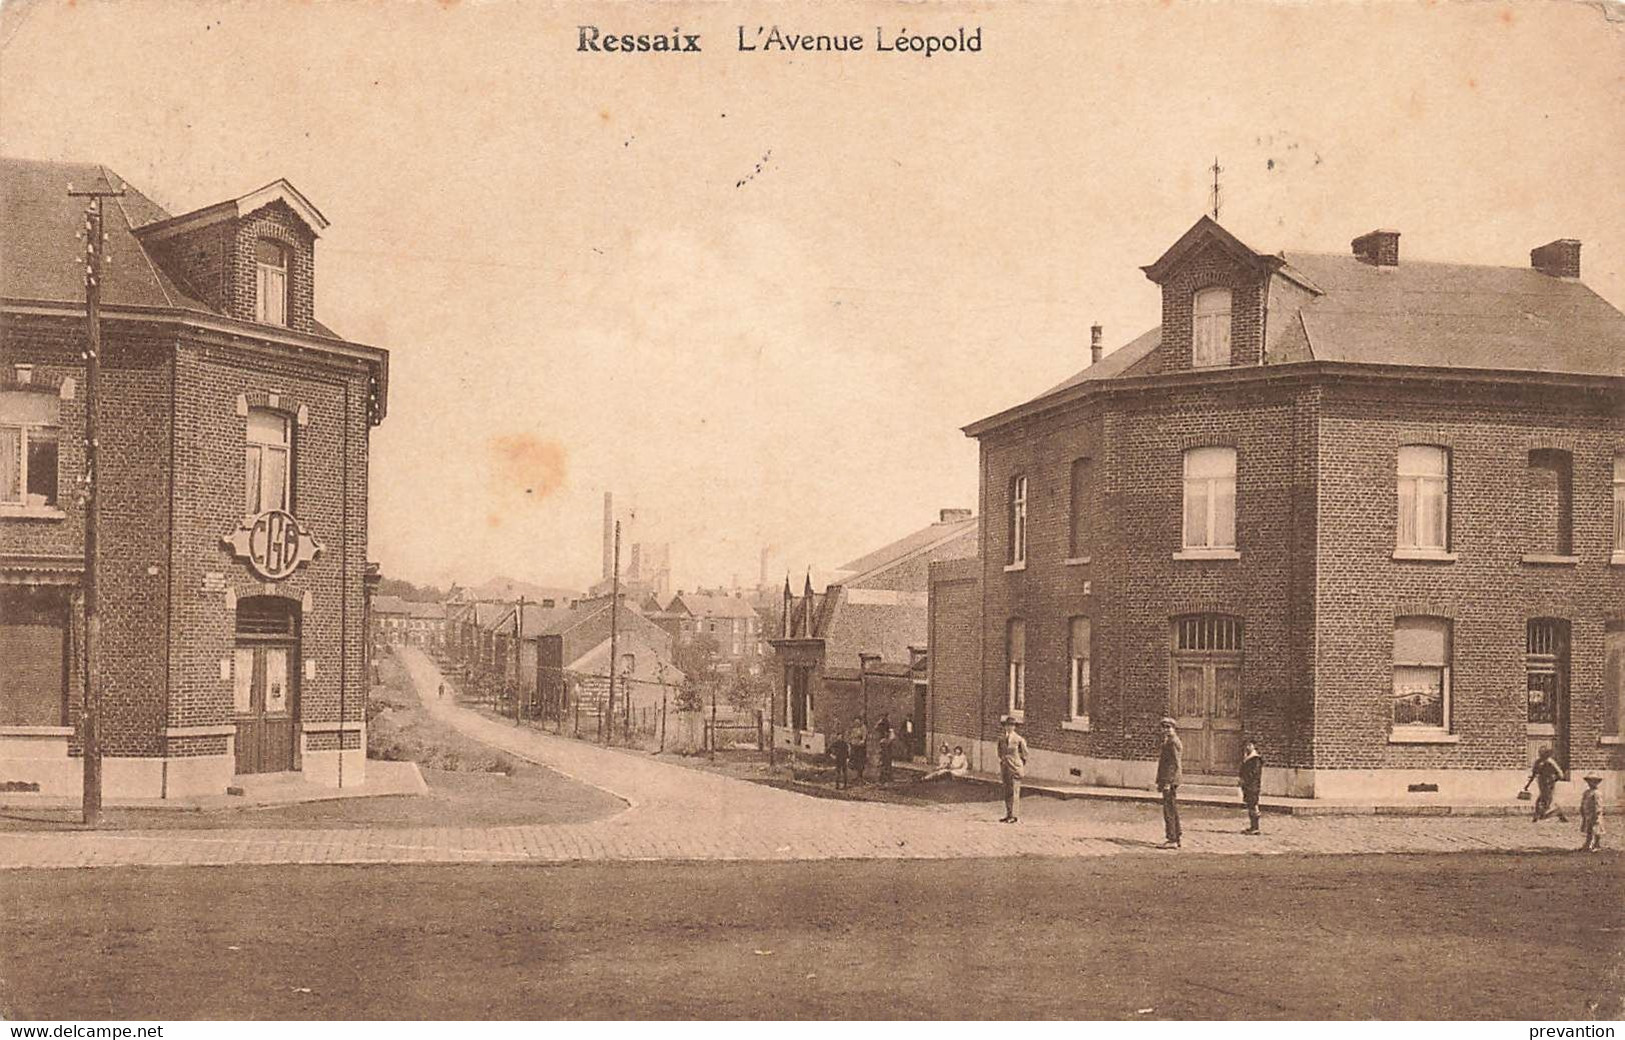 RESSAIX - L'Avenue Léopold - Carte Circulé En 1928 - Binche